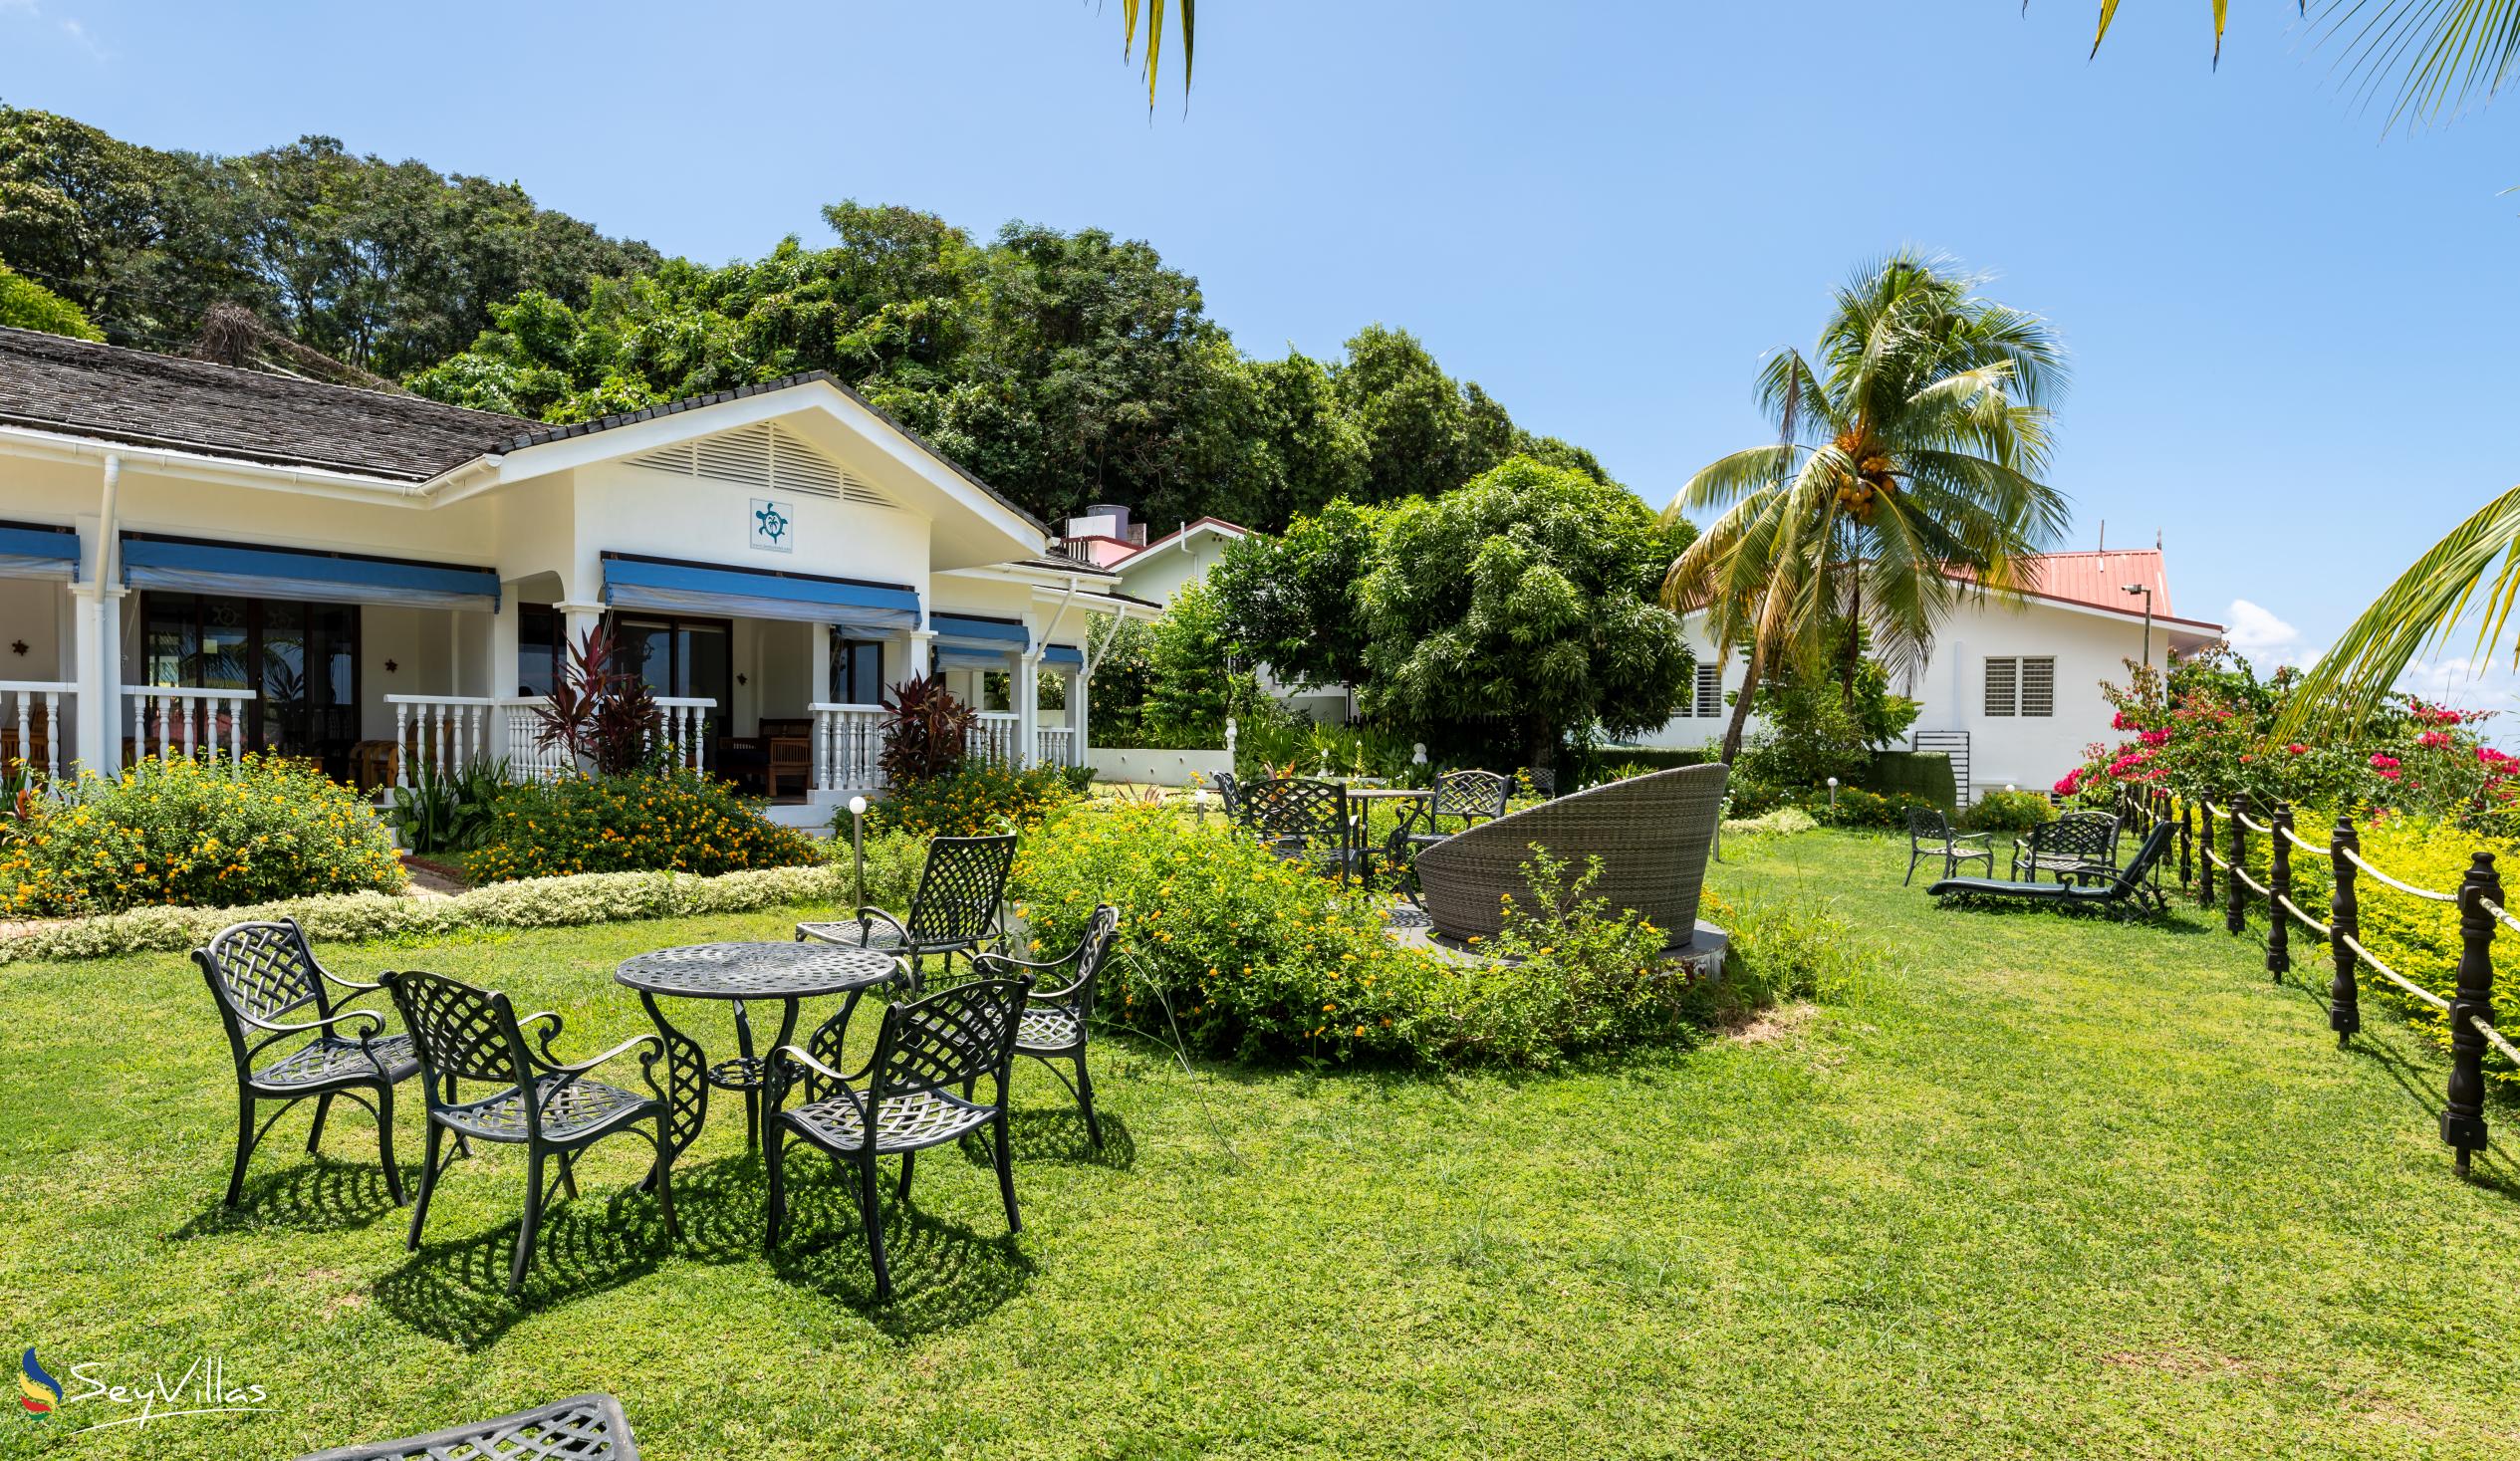 Foto 25: Le Relax Hotel & Restaurant - Aussenbereich - Mahé (Seychellen)